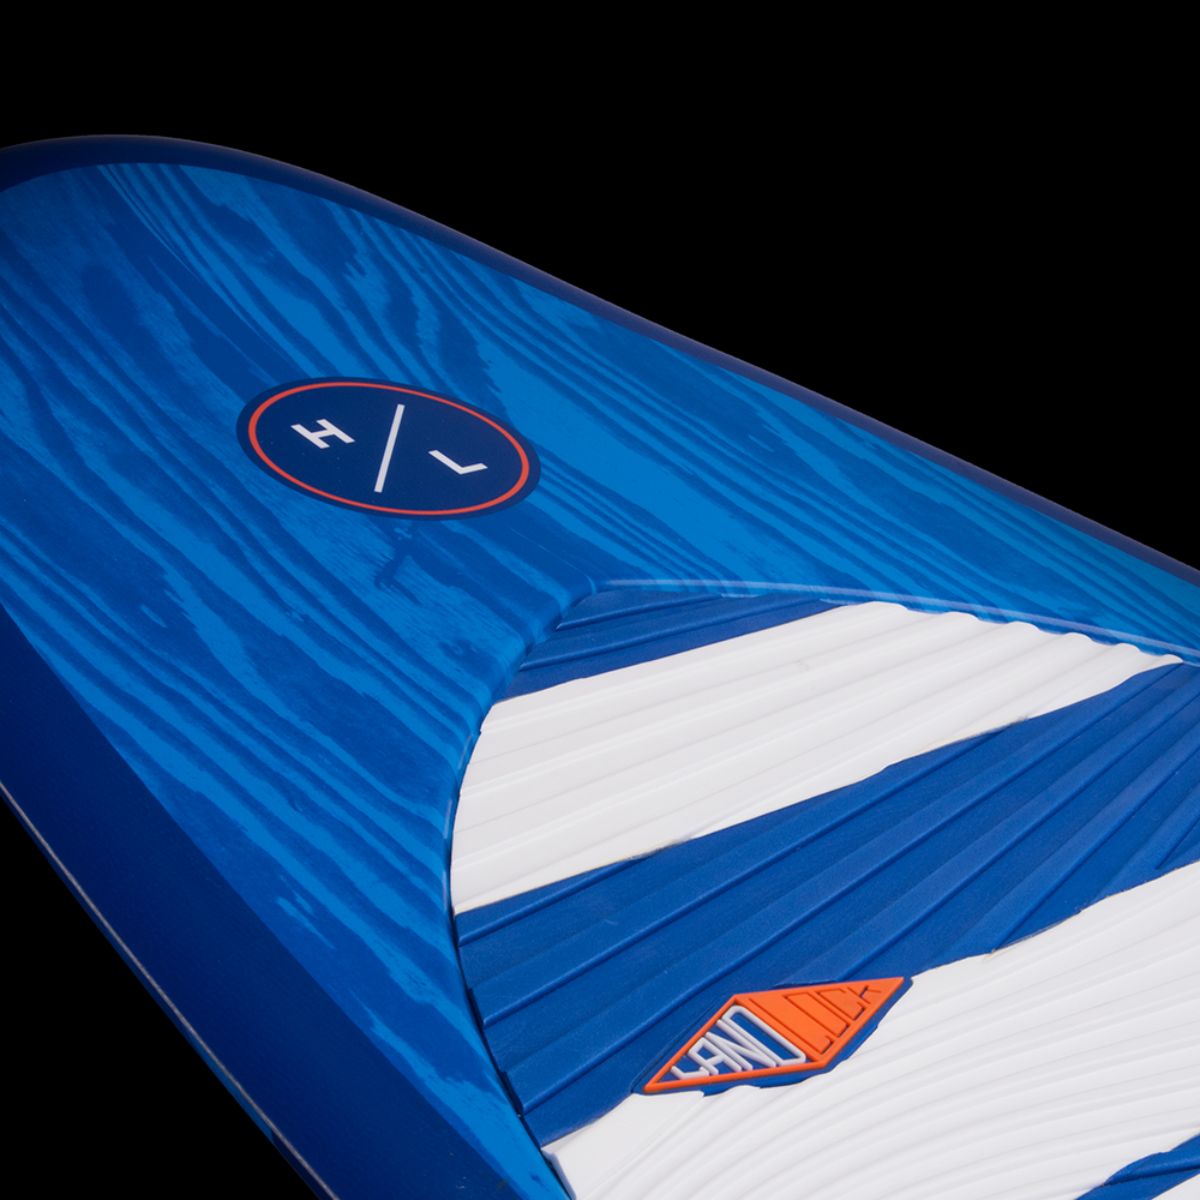 Hyperlite Landlock Wakesurf Board 2022 - BoardCo